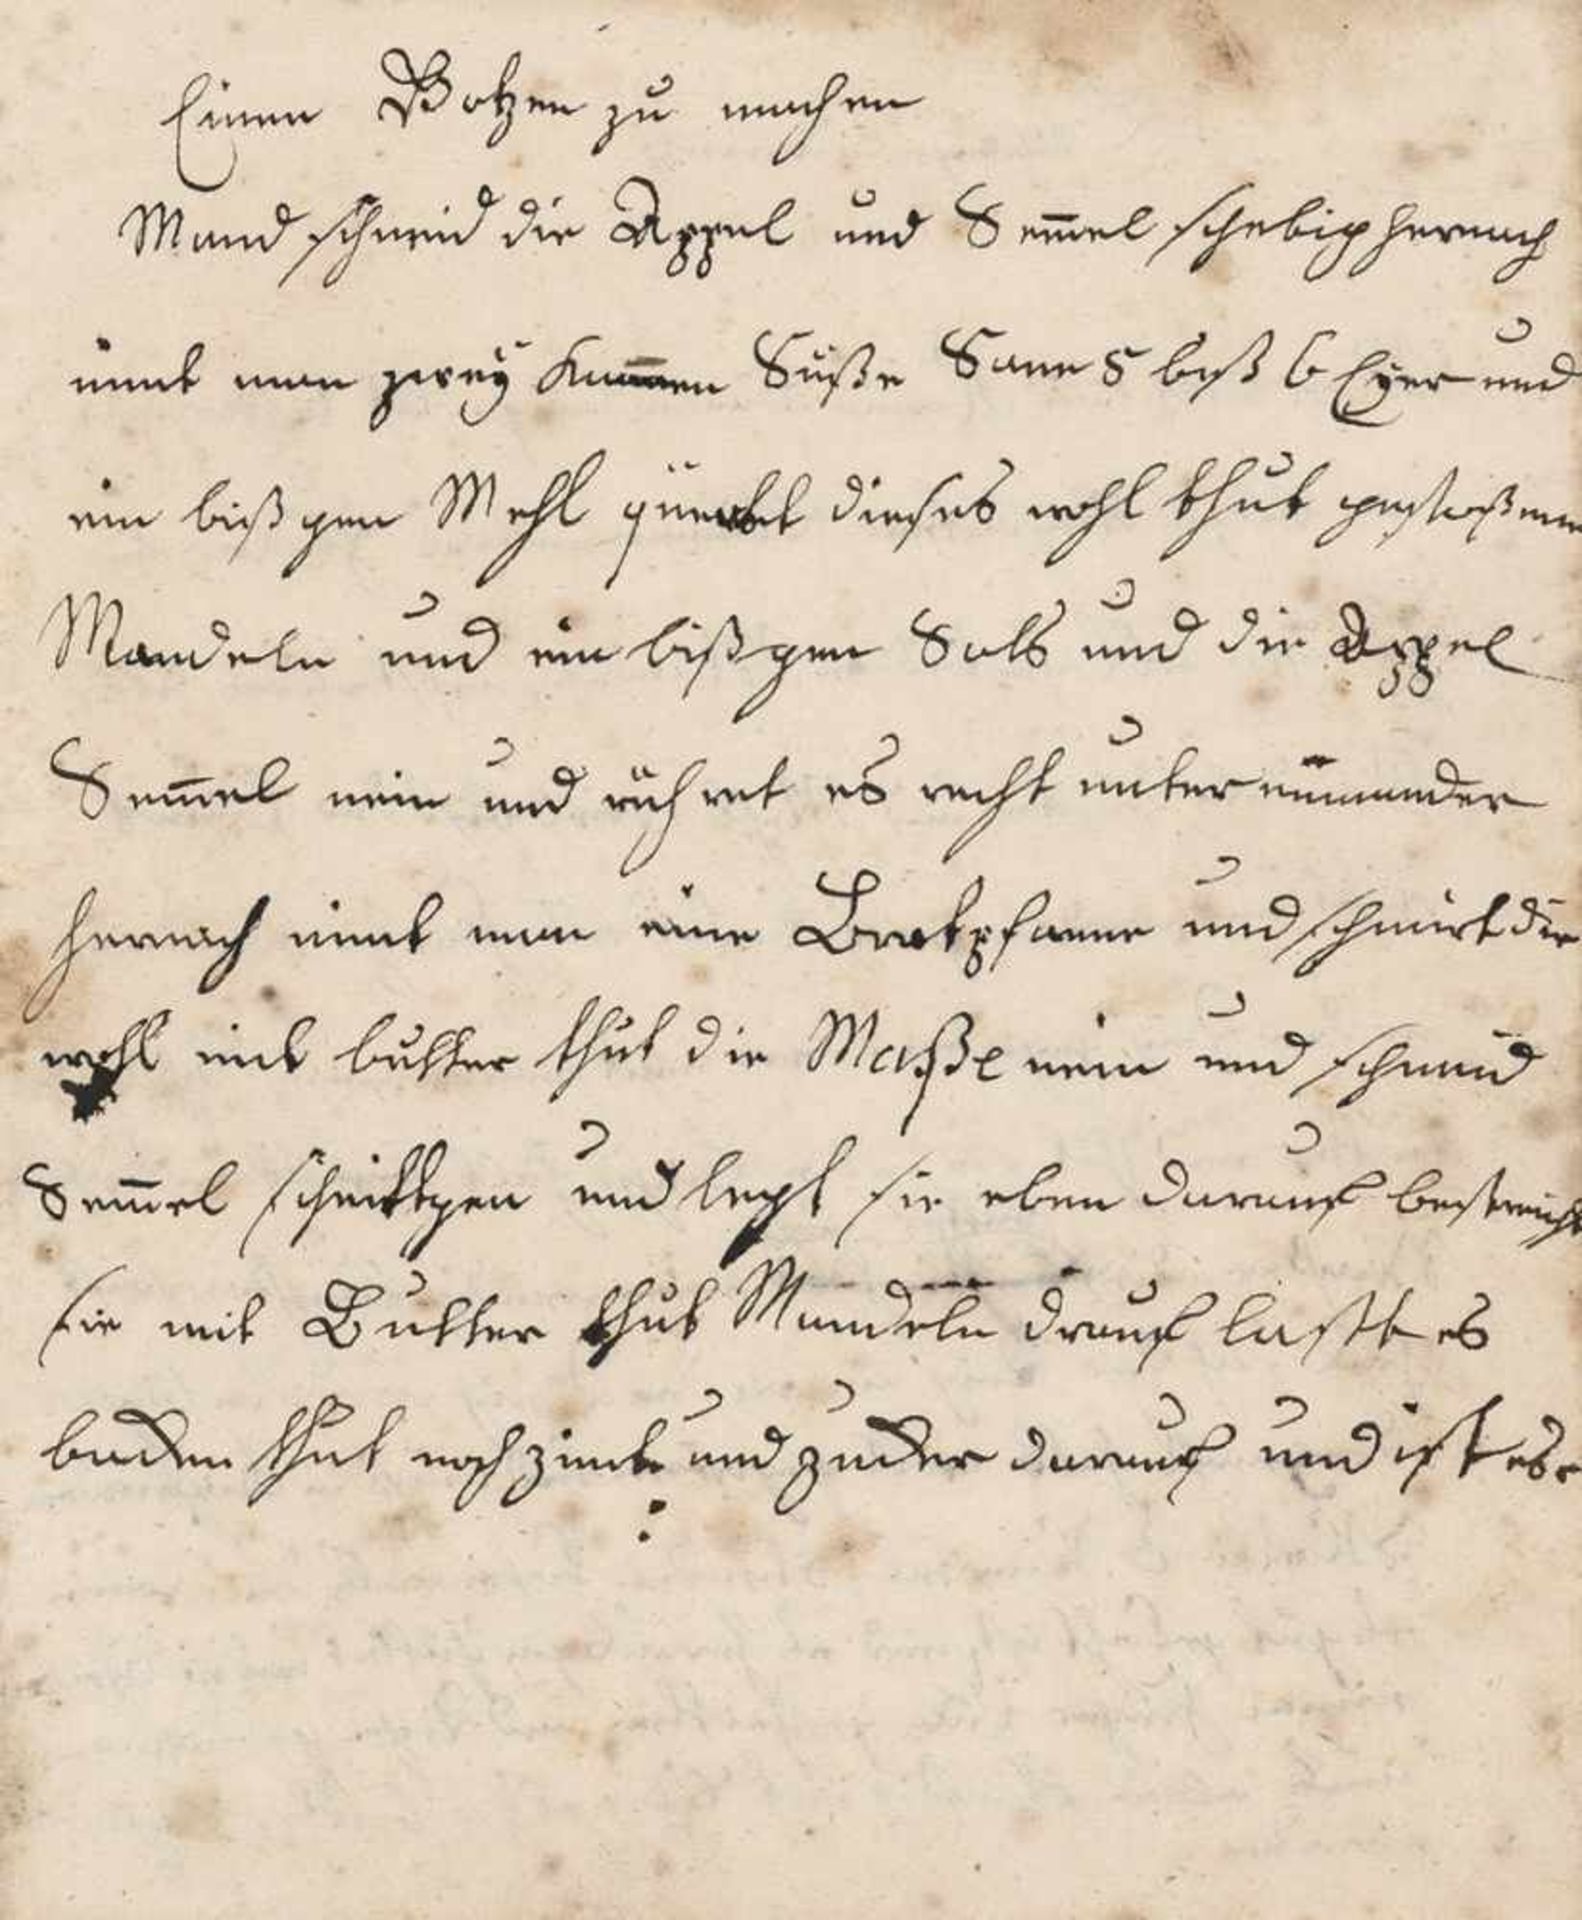 Kochbuch-Handschrift: Deutsche Handschrift auf Papier